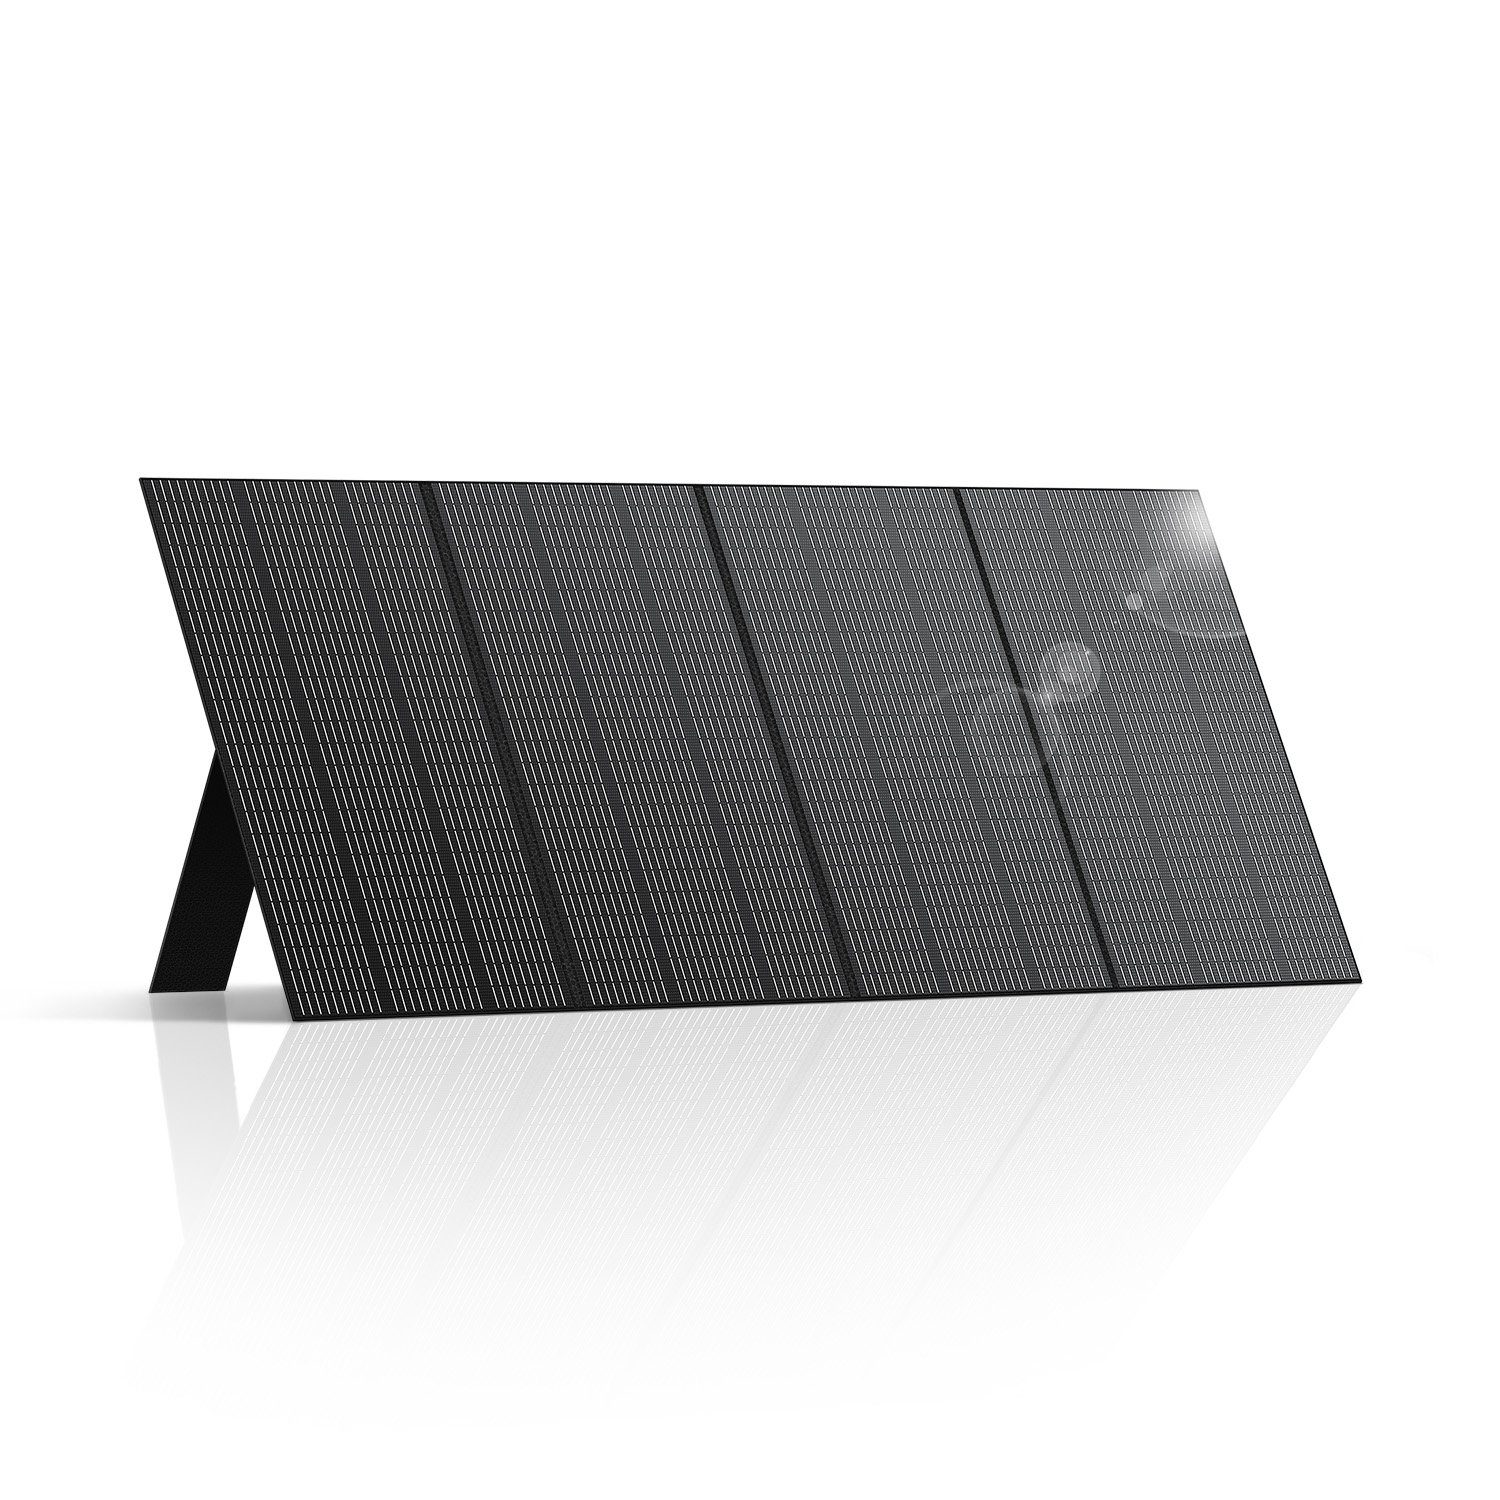 Solaranlage BLUETTI Solarpanel, PV350 (1 für Stromerzeuger), 350W Schutz Solarmodell 350W BLUETTI IP65